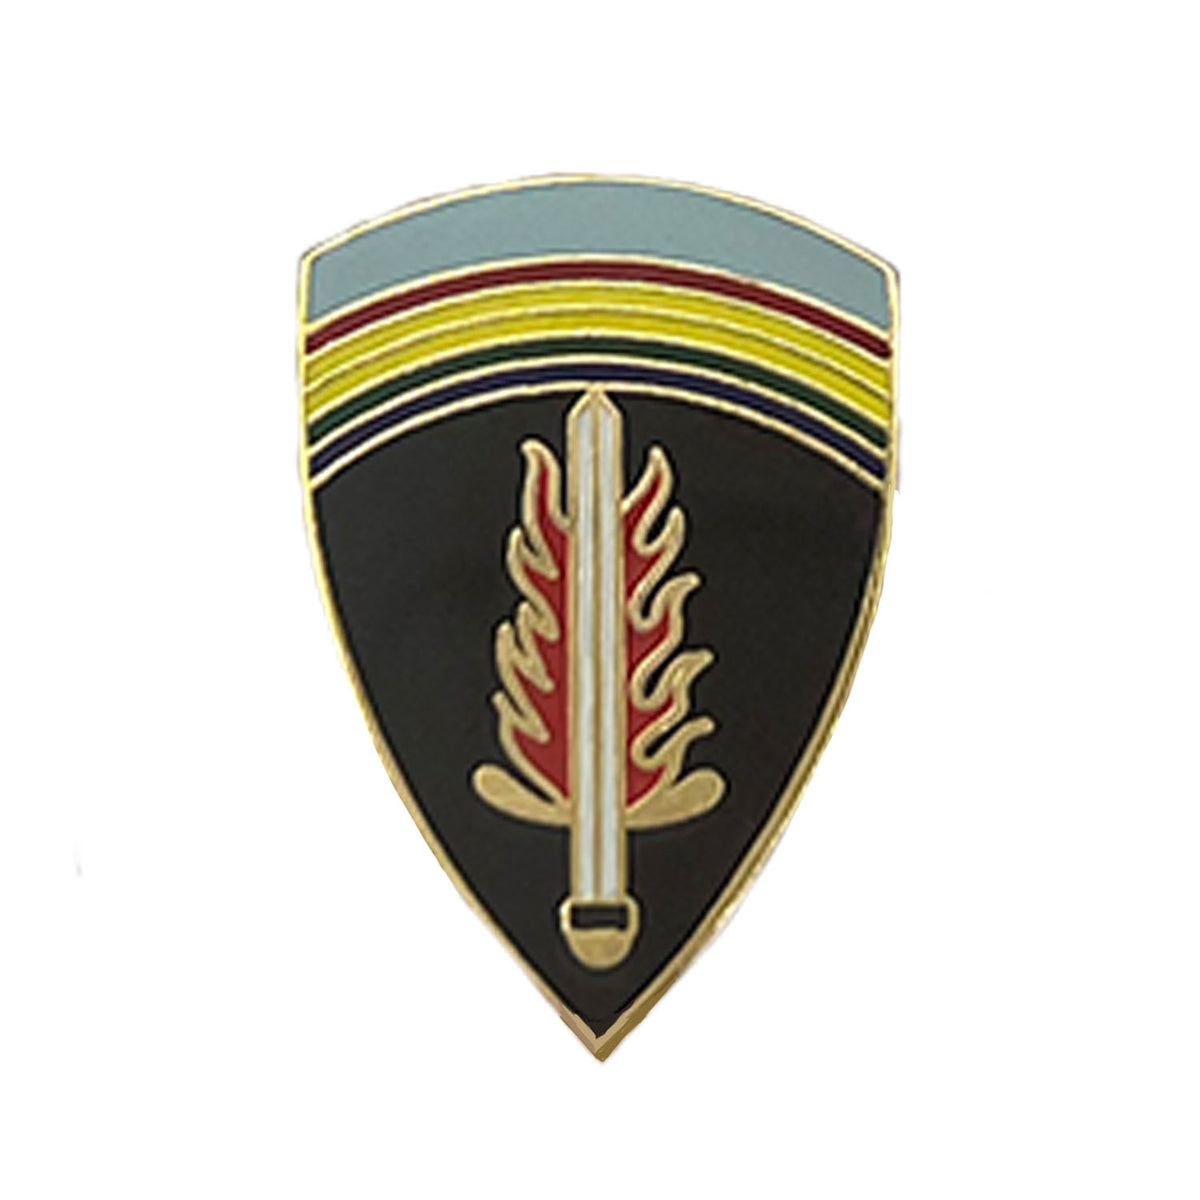 SHAEF multi-colored metal pin